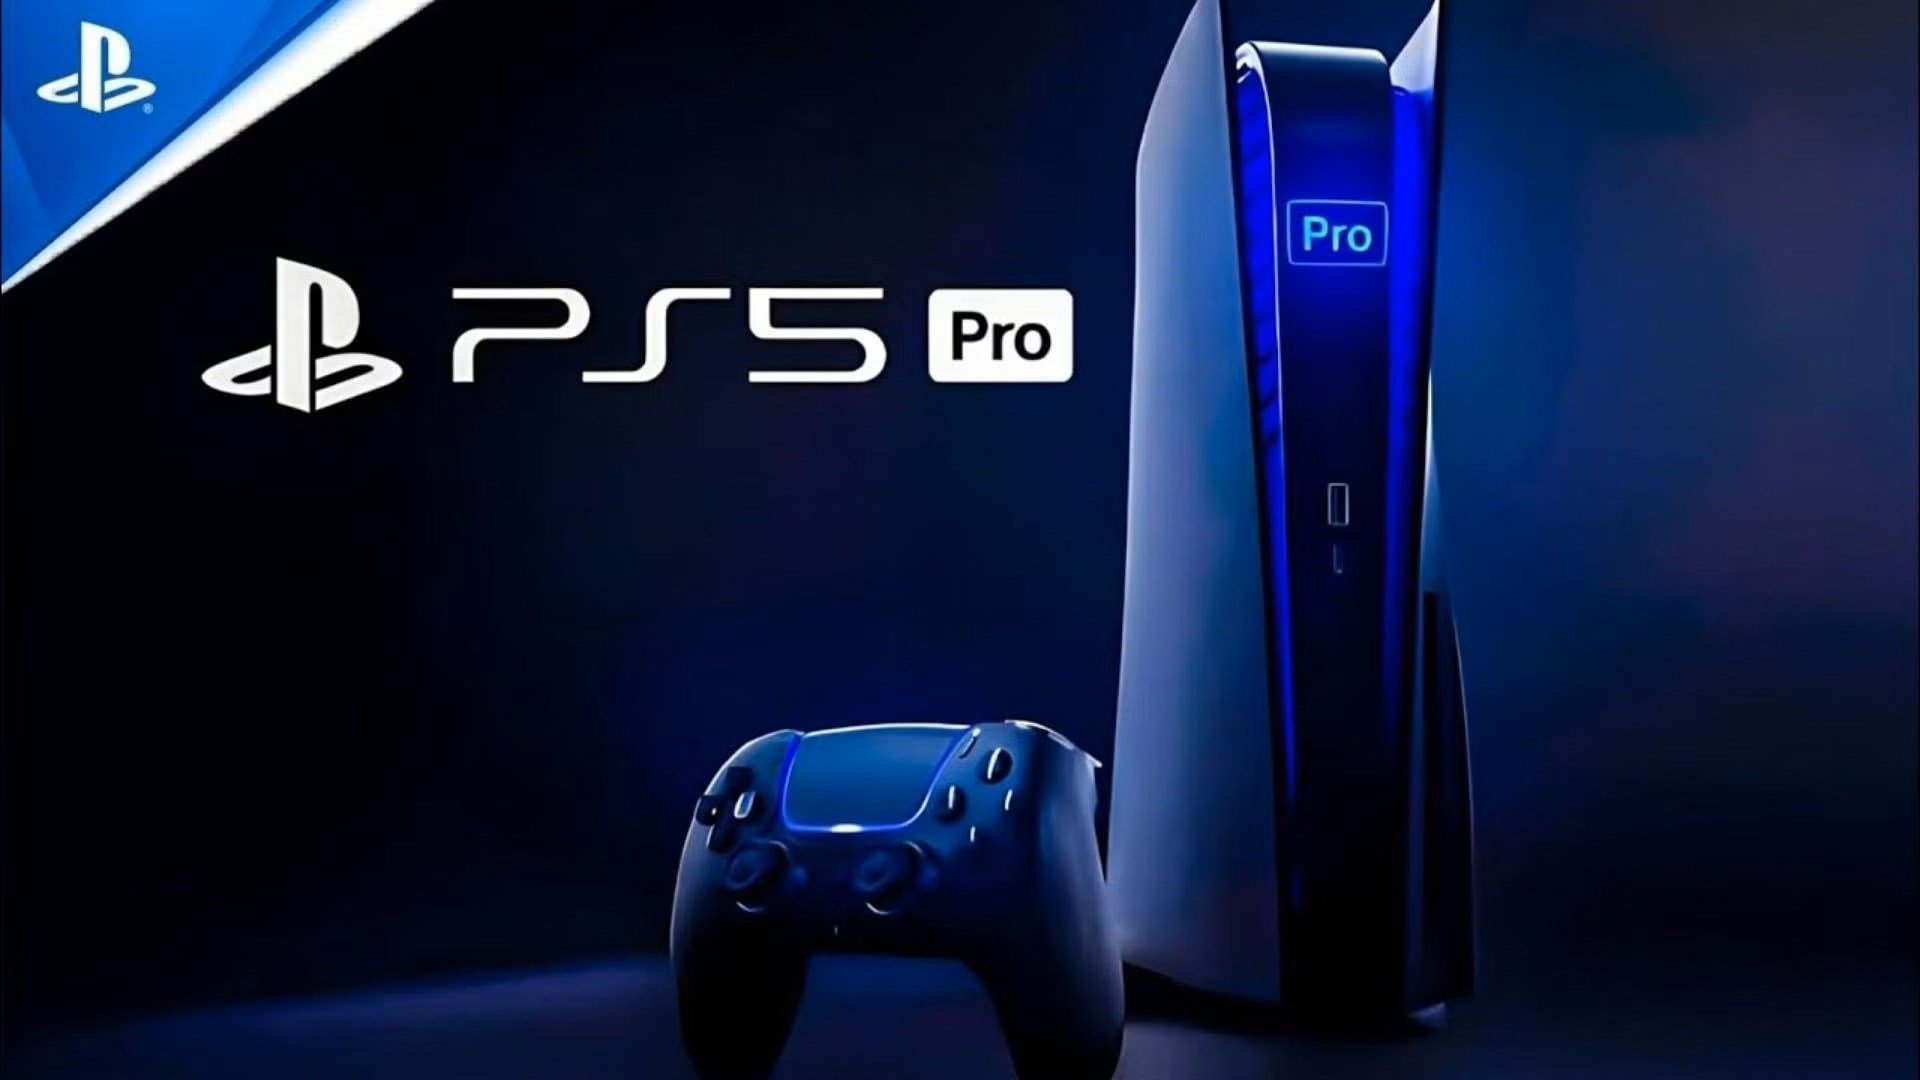 PS5 Pro specs leak online, suggesting major GPU upgrade - News - News